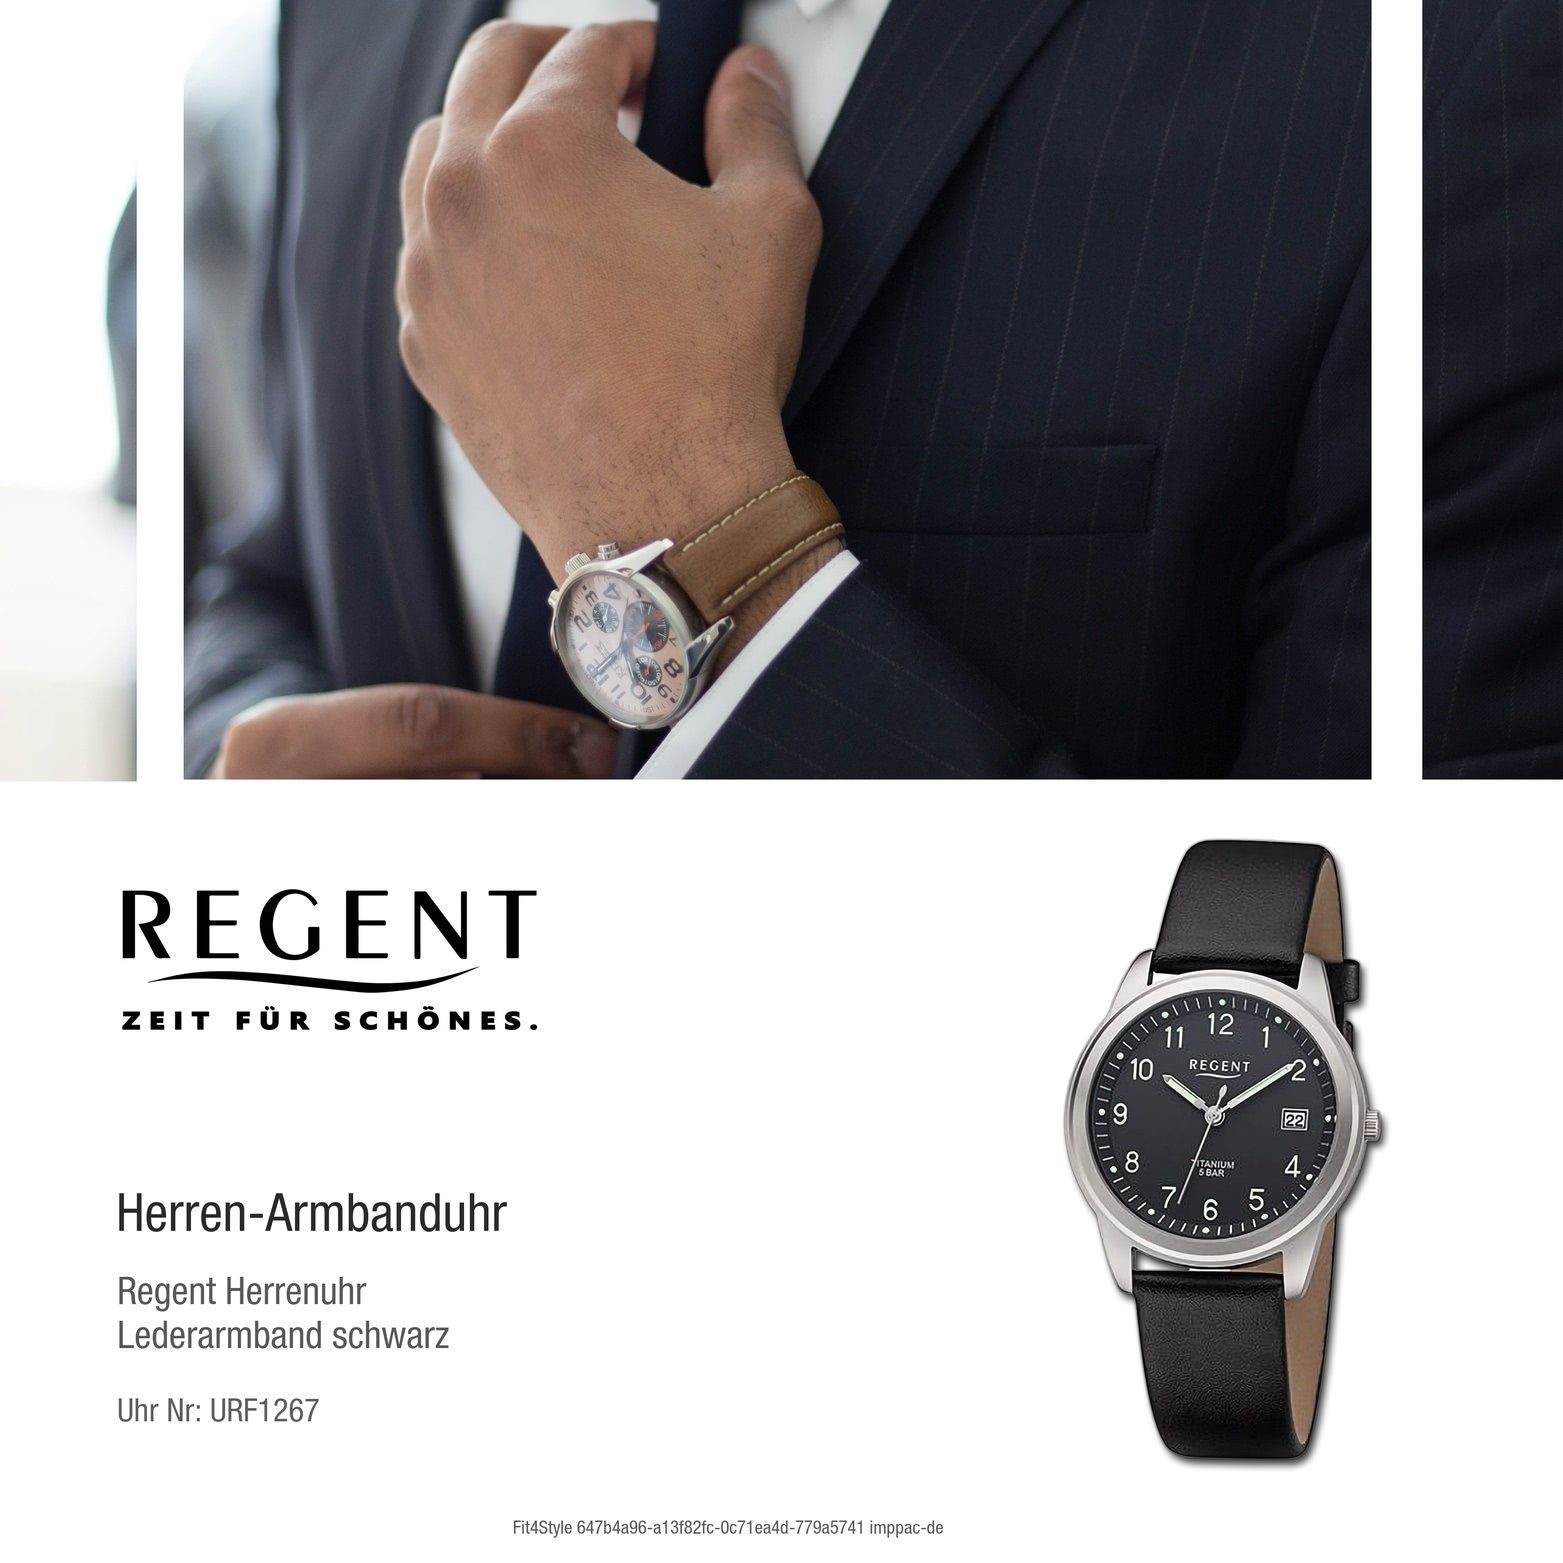 Gehäuse, (ca. groß Herrenuhr rundes Armbanduhr 36mm) Lederarmband schwarz, Analog, Quarzuhr Regent extra Regent Herren